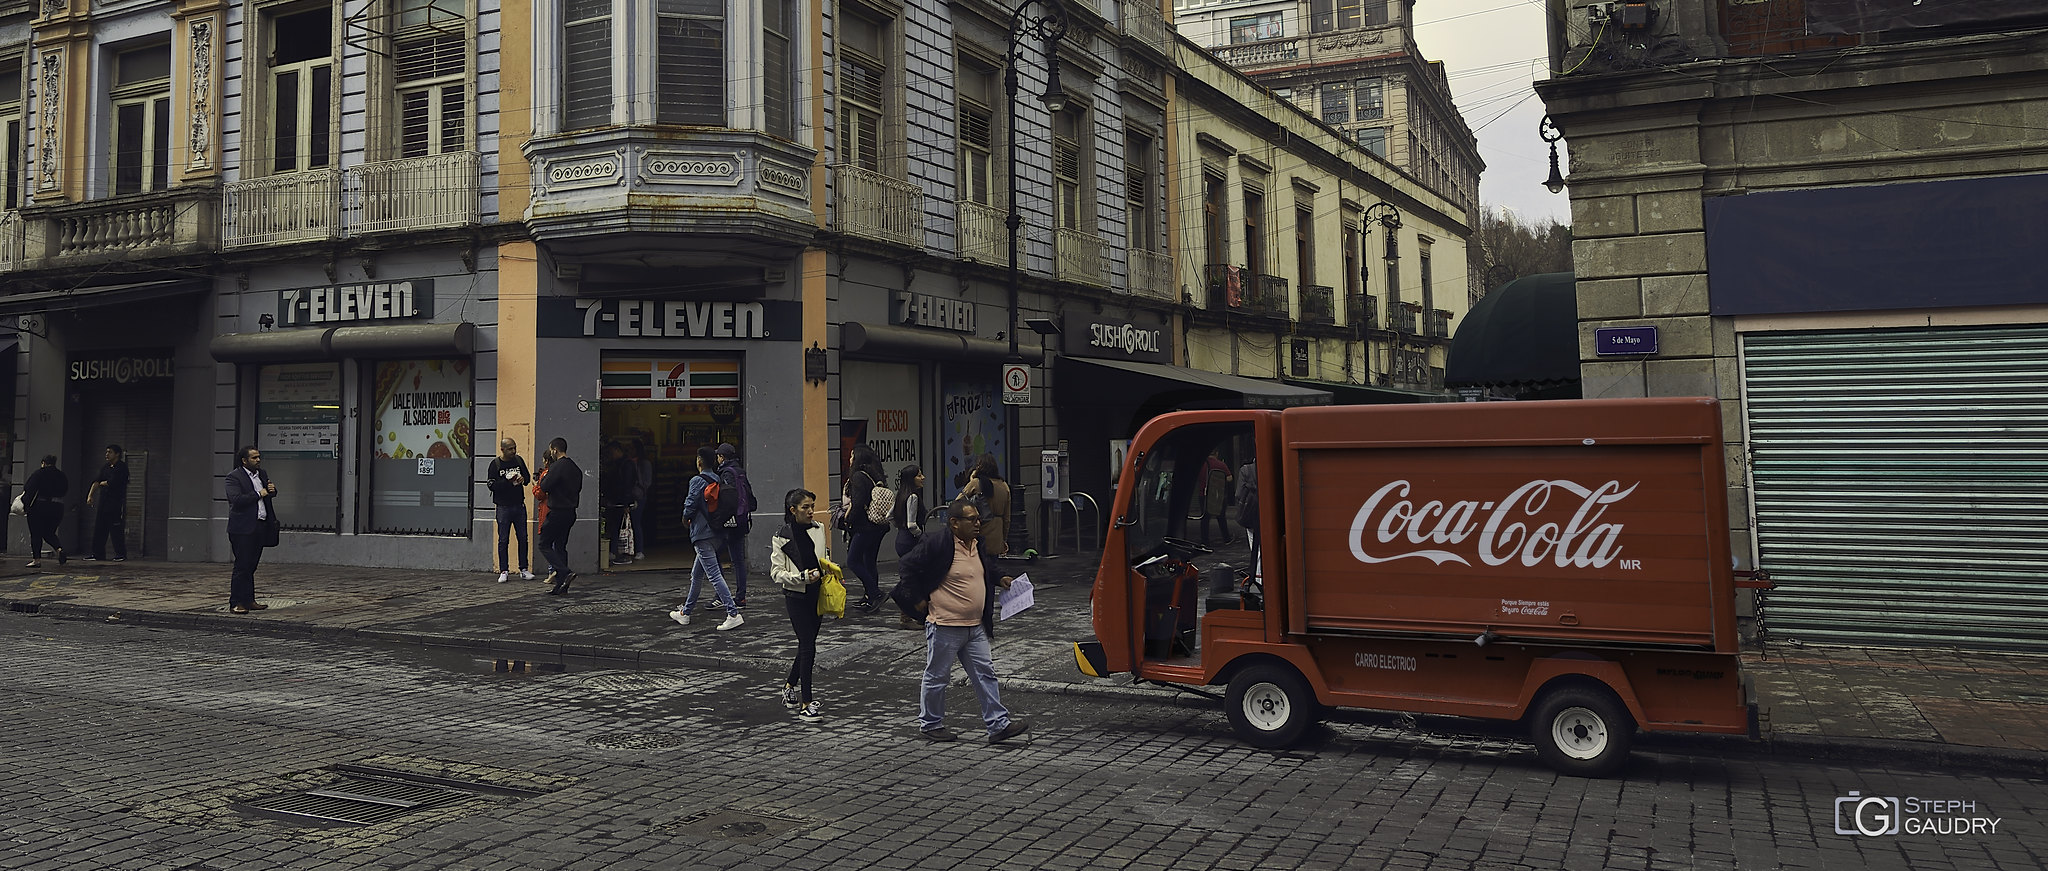 Coca Cola @ Mexico [Cliquez pour lancer le diaporama]